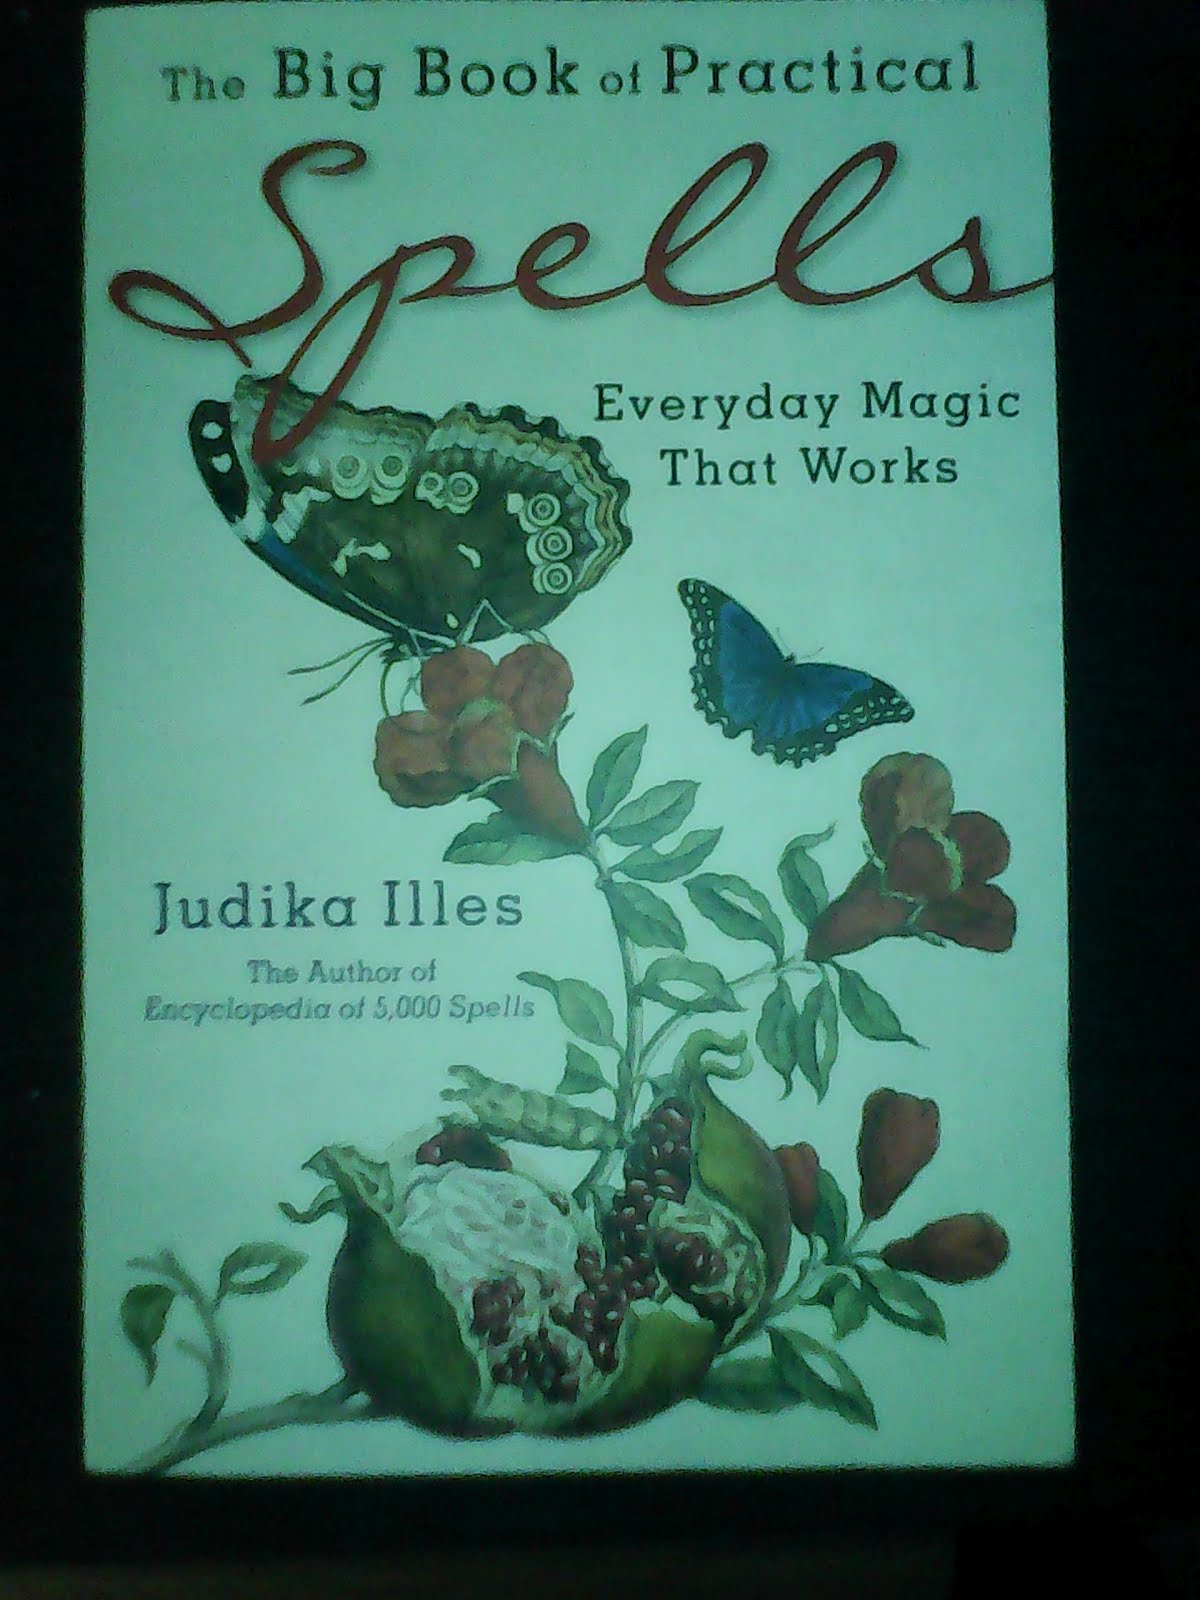 The Big Book of Practical Spells by Judika Illes.